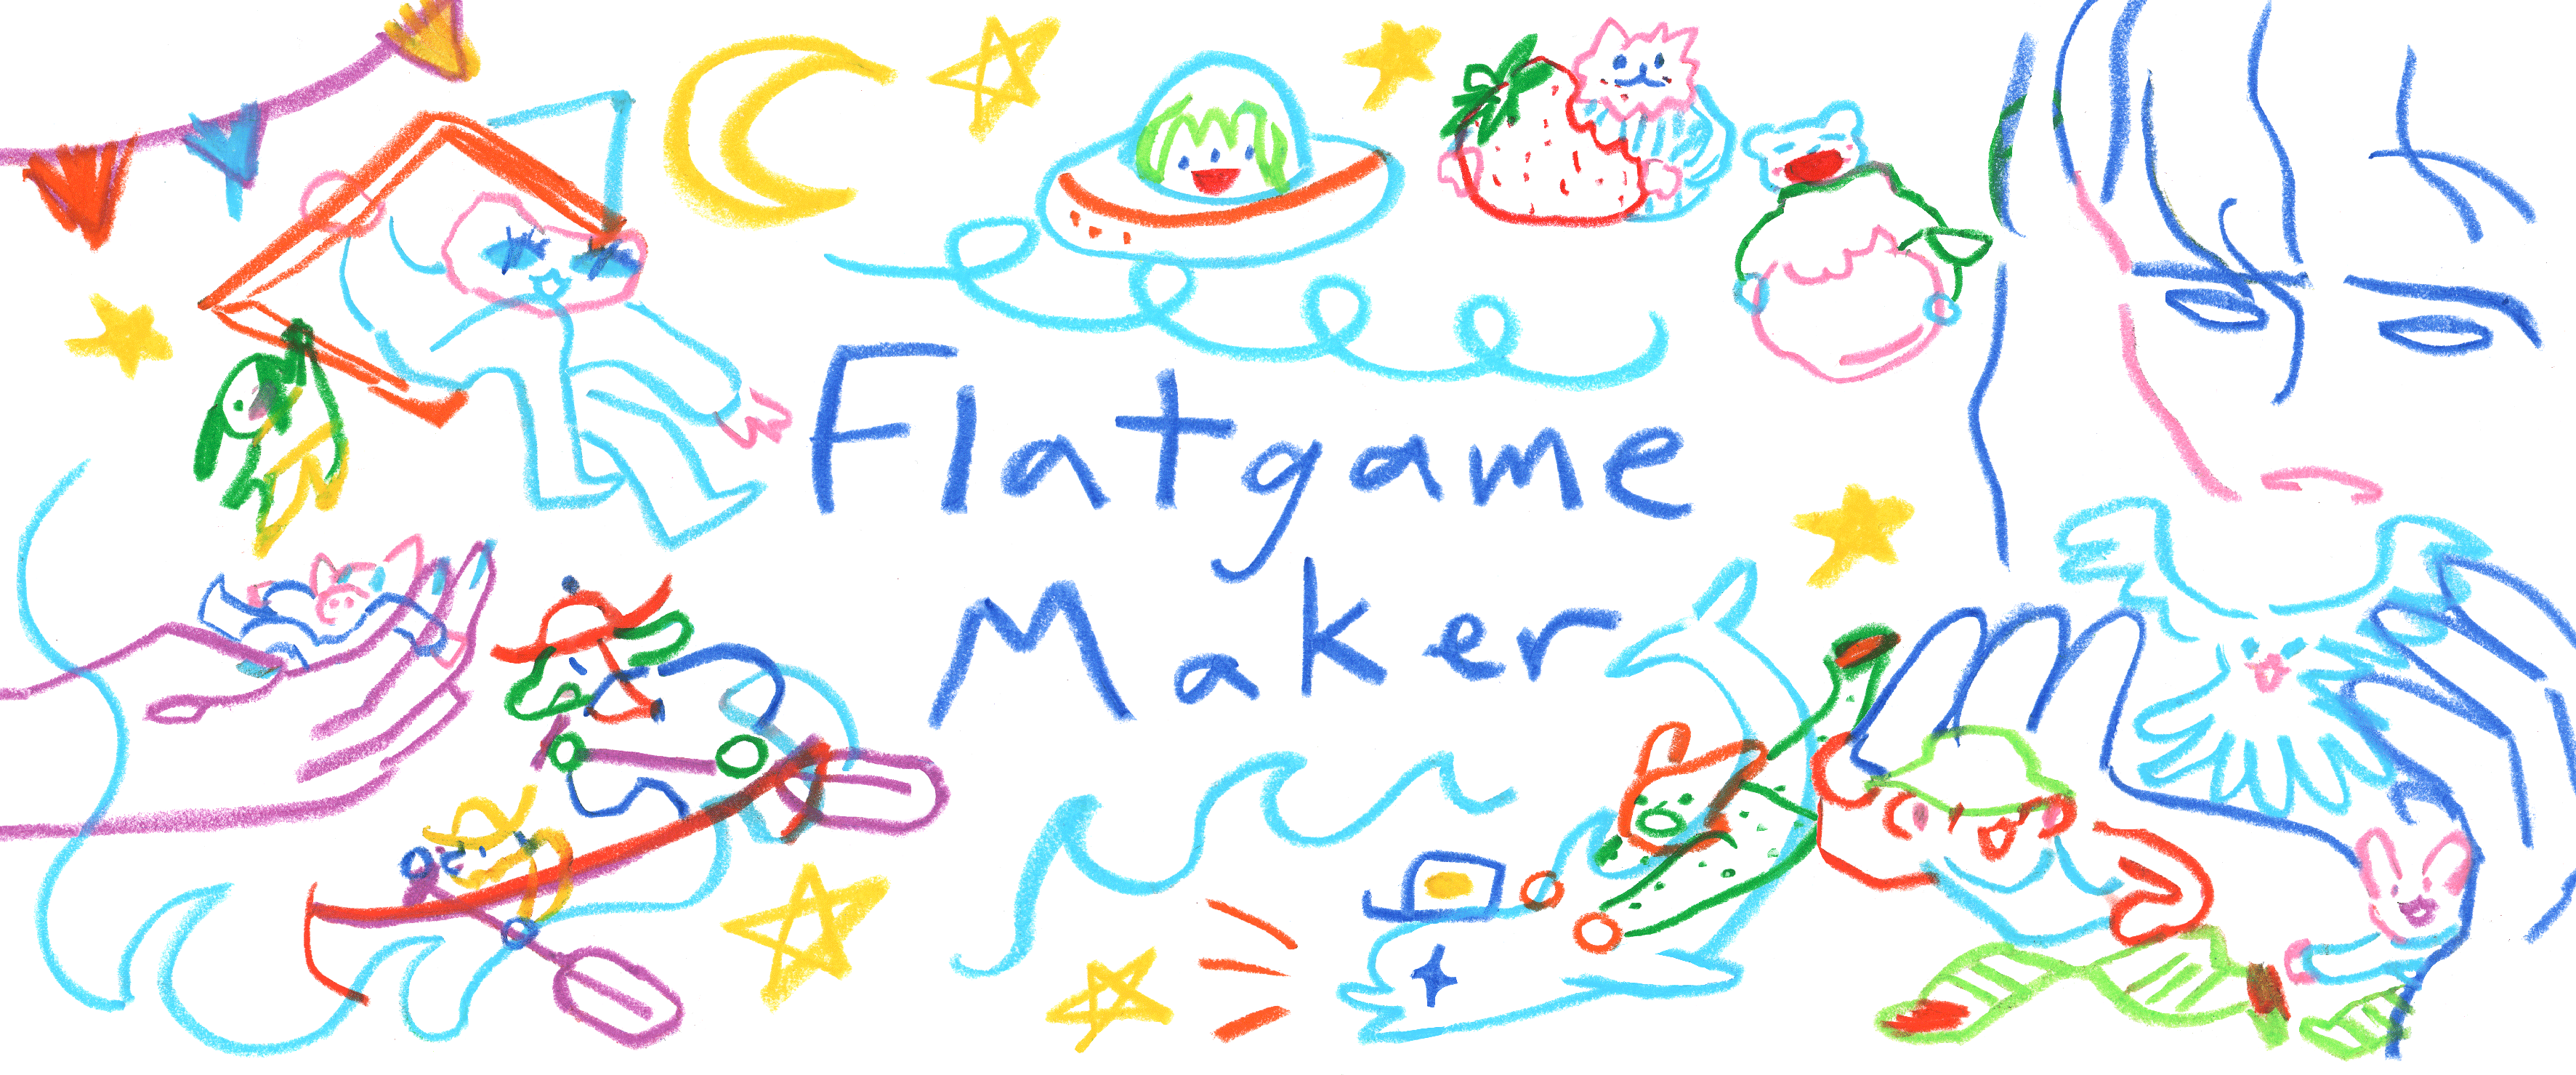 Flatgame Maker